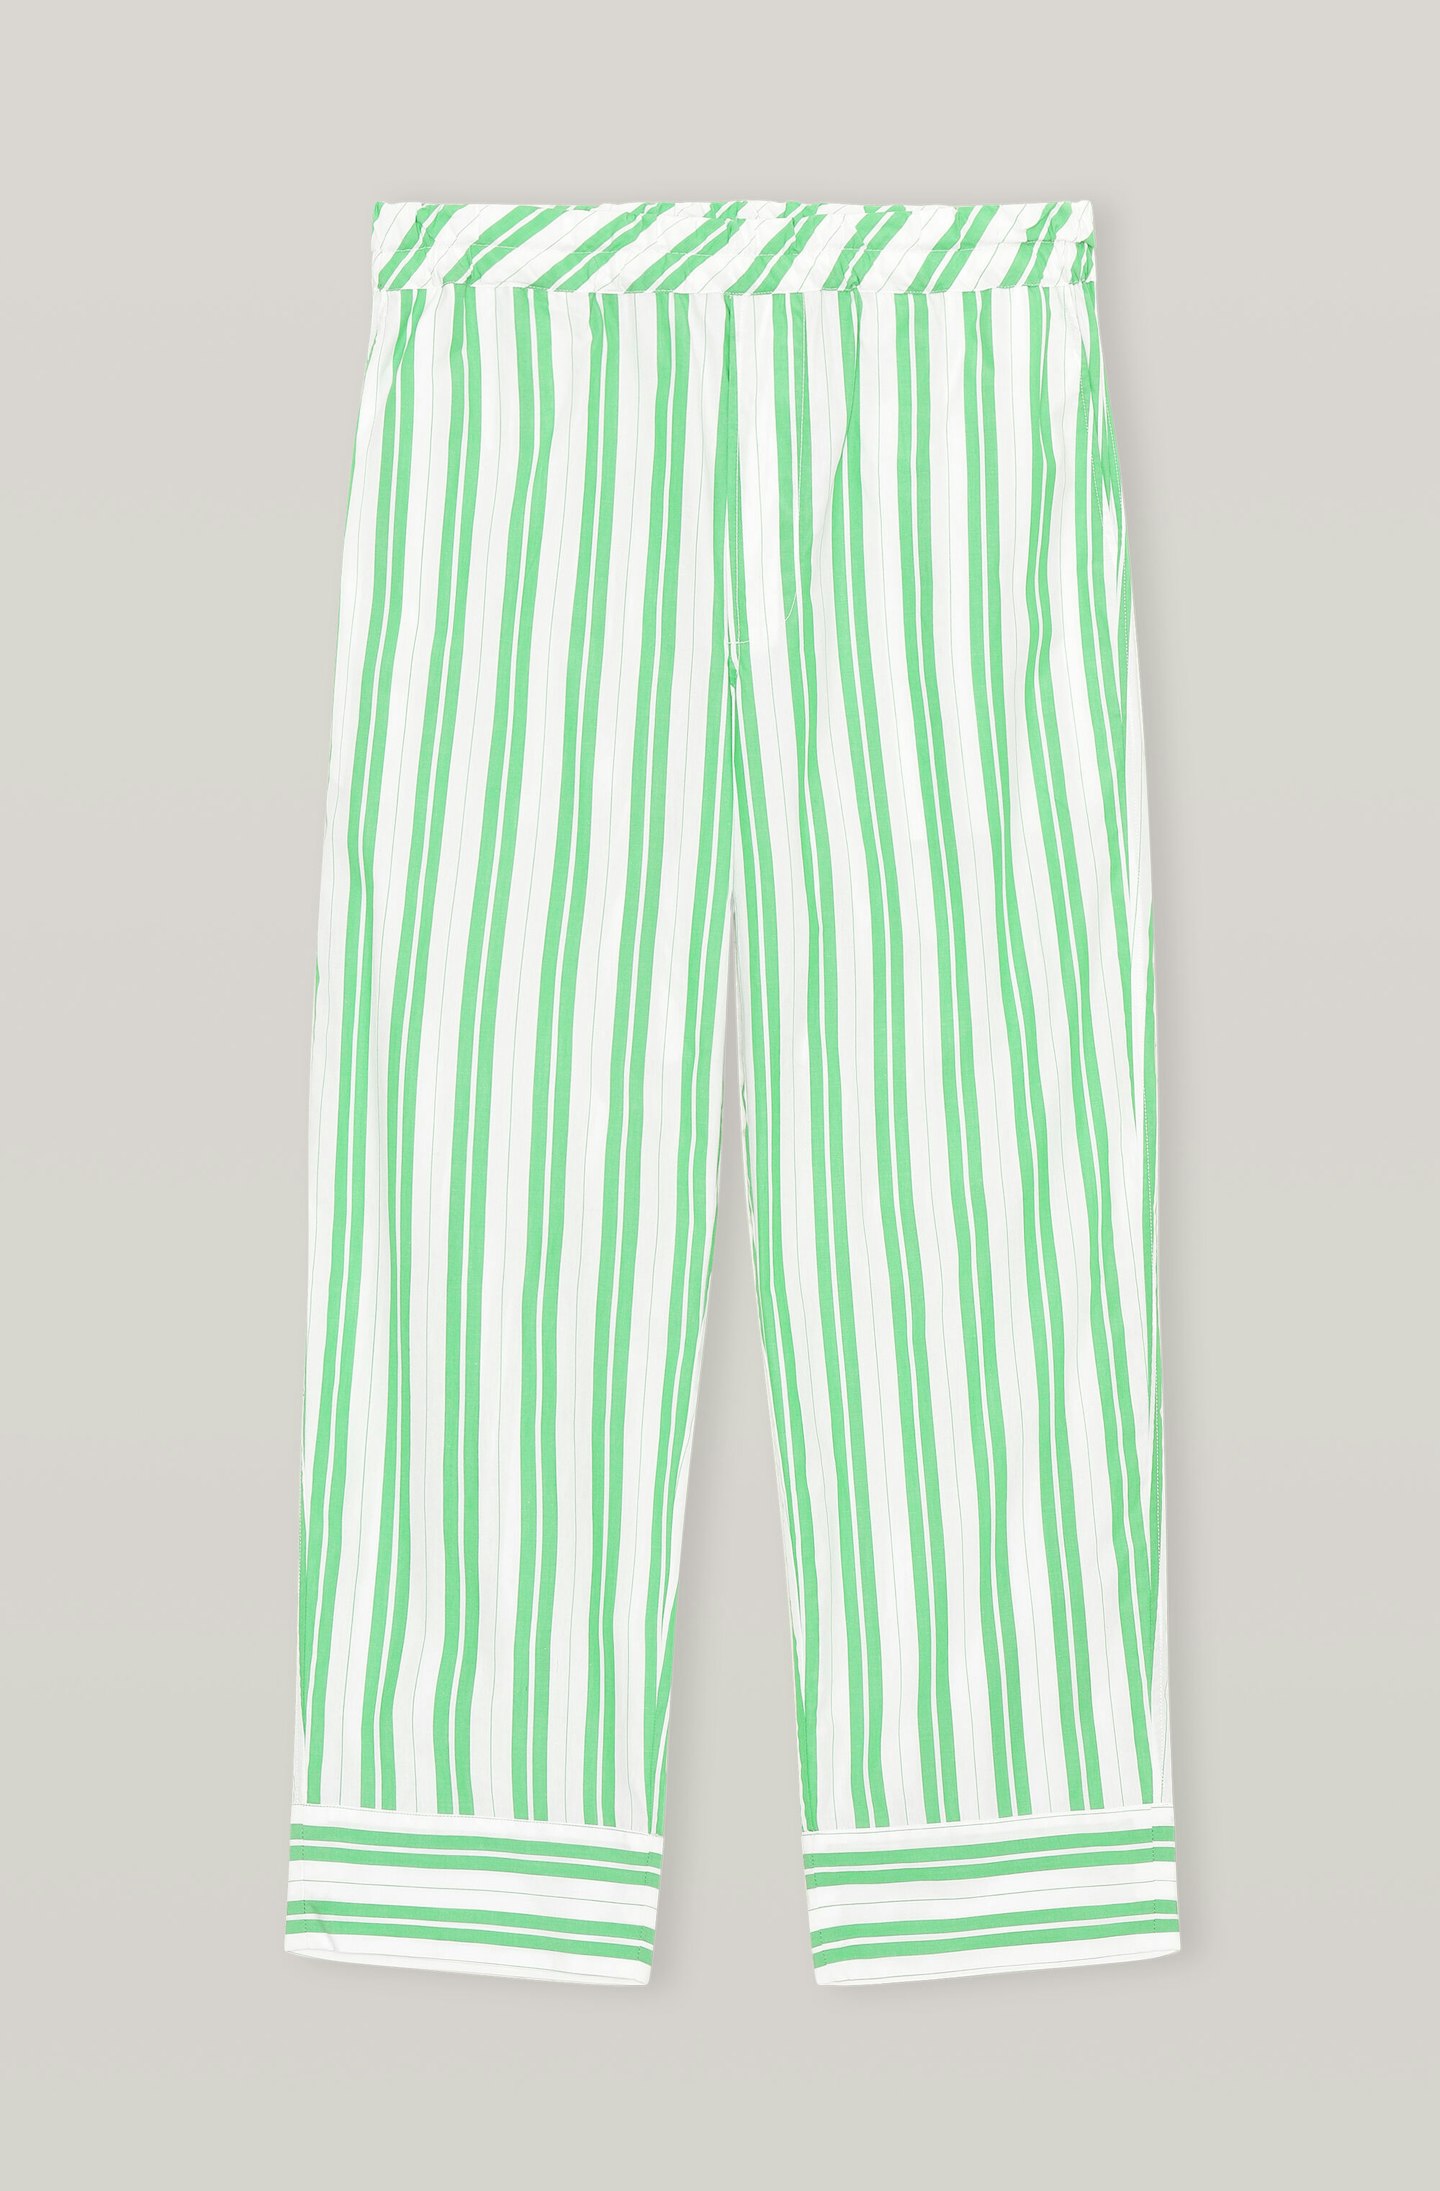 Ganni, Stripe Cotton Pants, £155